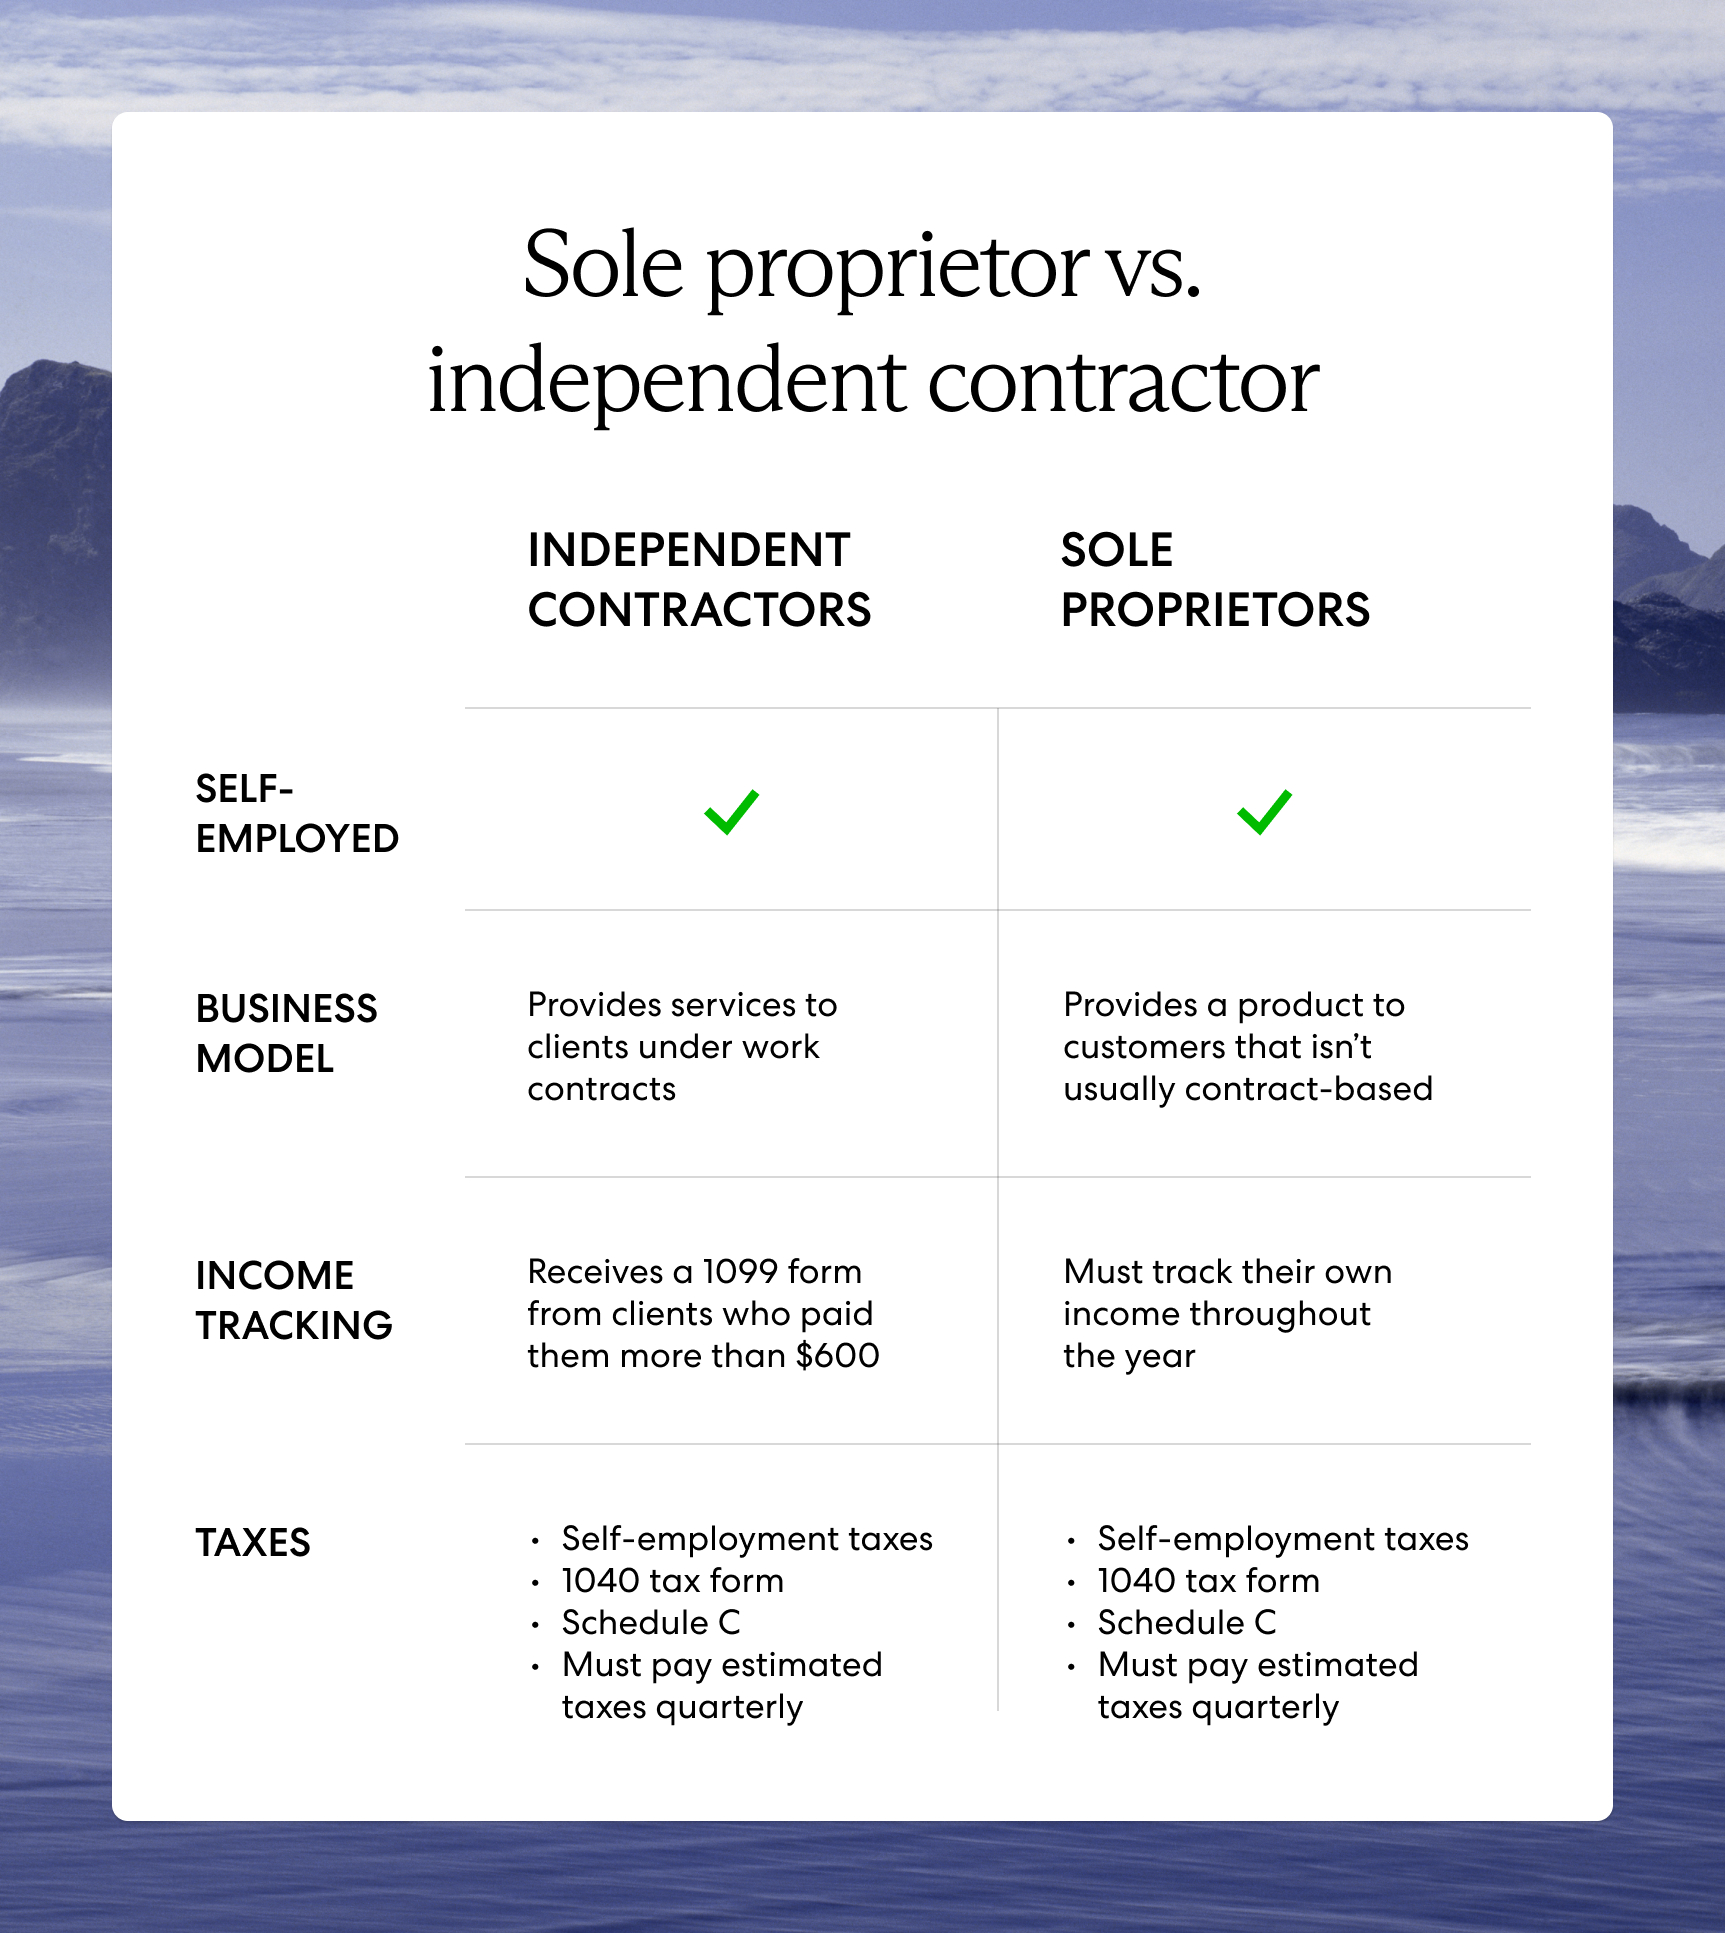 Sole proprietor vs. independent contractor